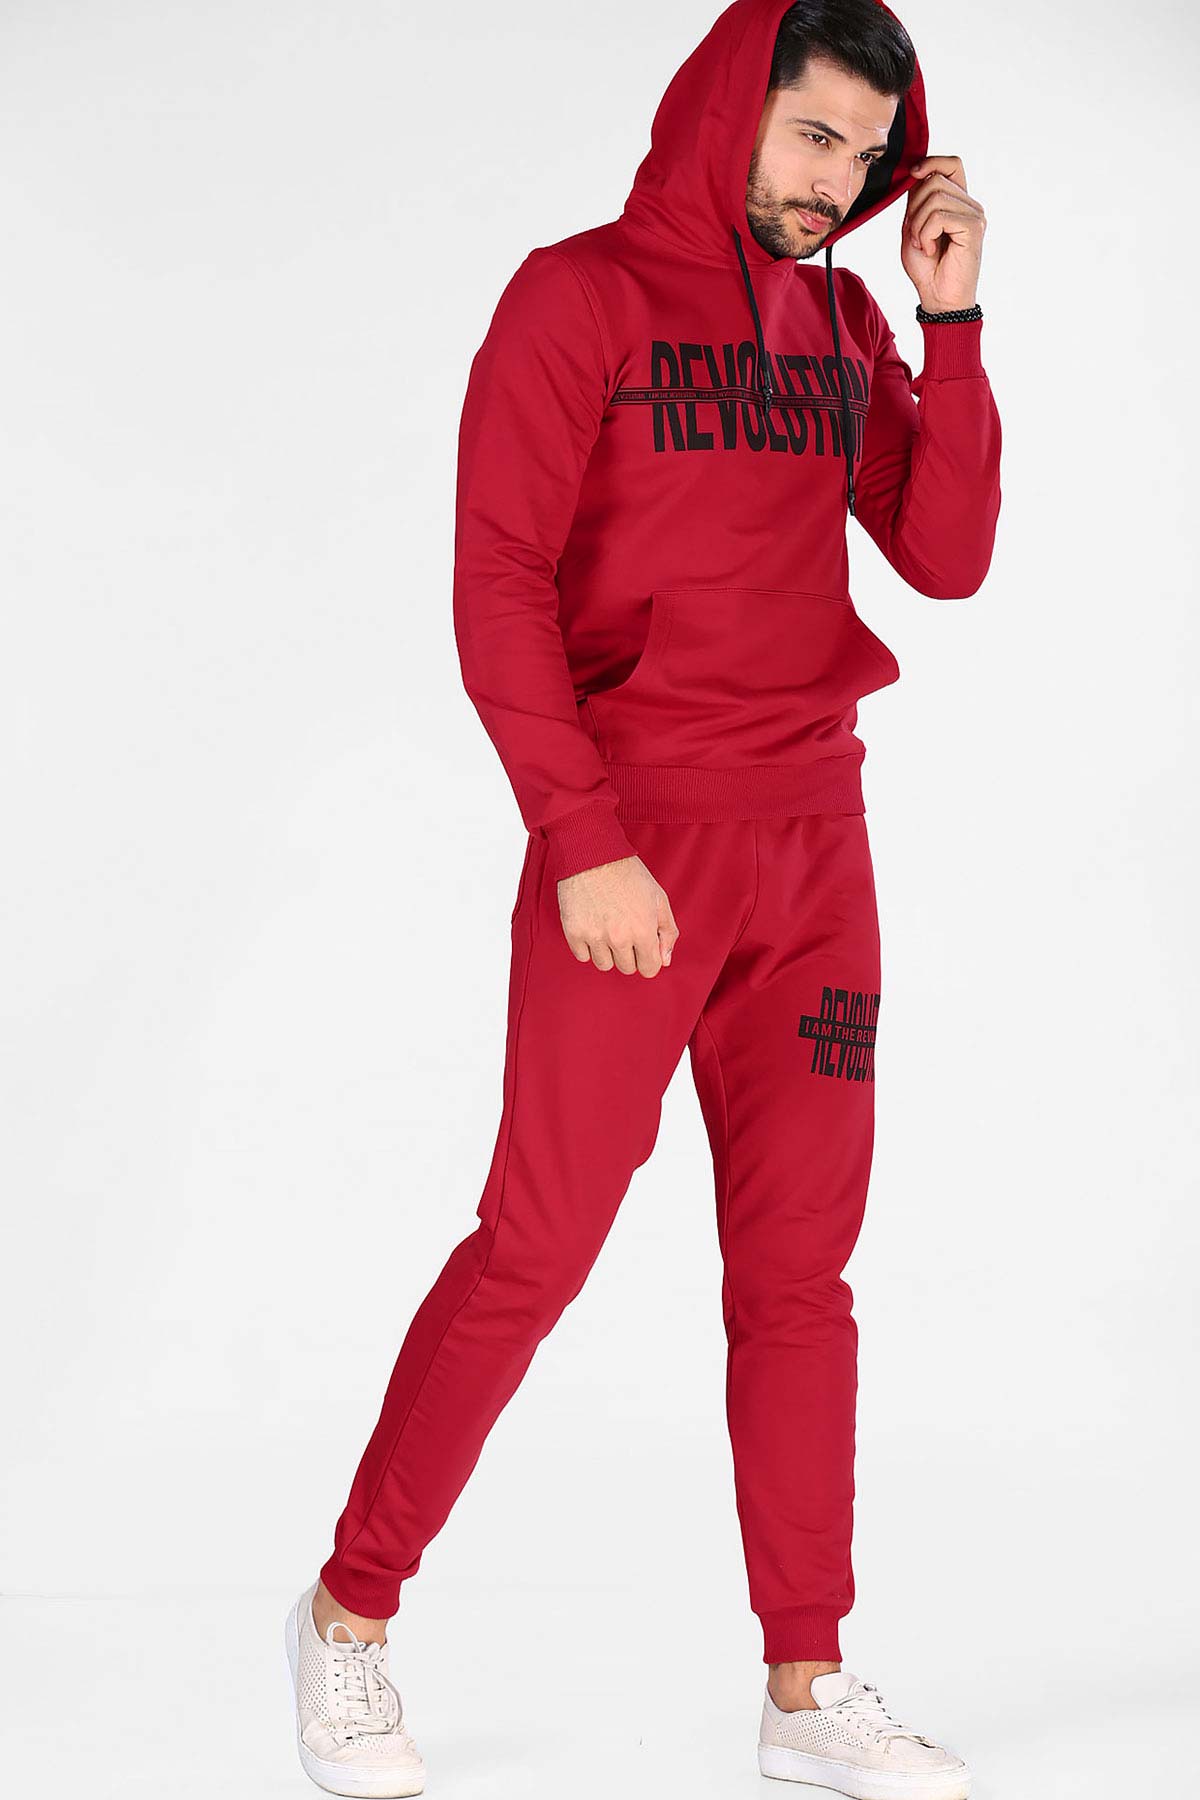 Men's Hooded Red Sweat Suit - Mpirez